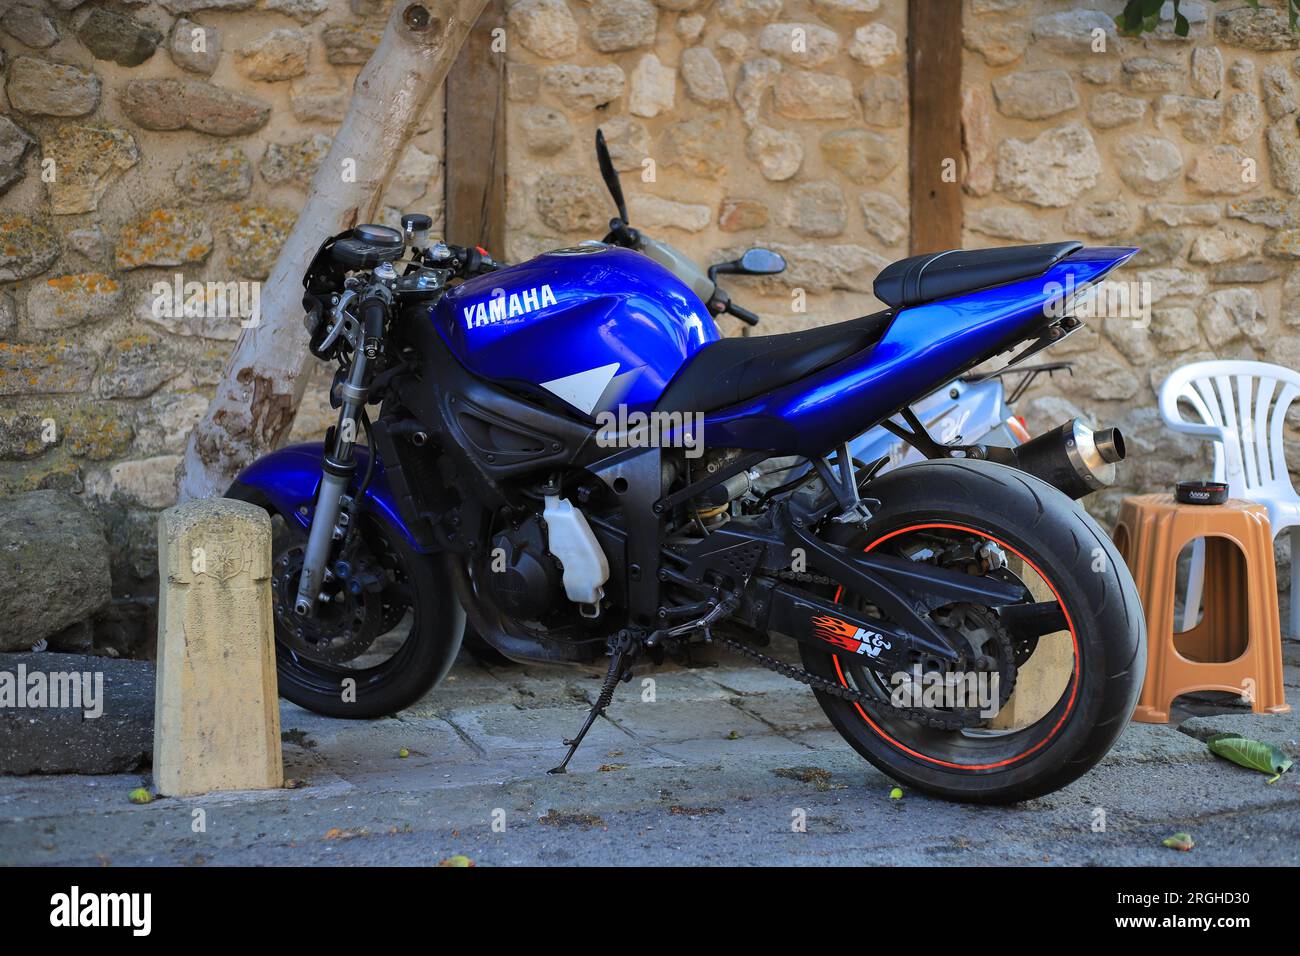 https://c8.alamy.com/comp/2RGHD30/blue-motorcycle-yamaha-r6-2RGHD30.jpg